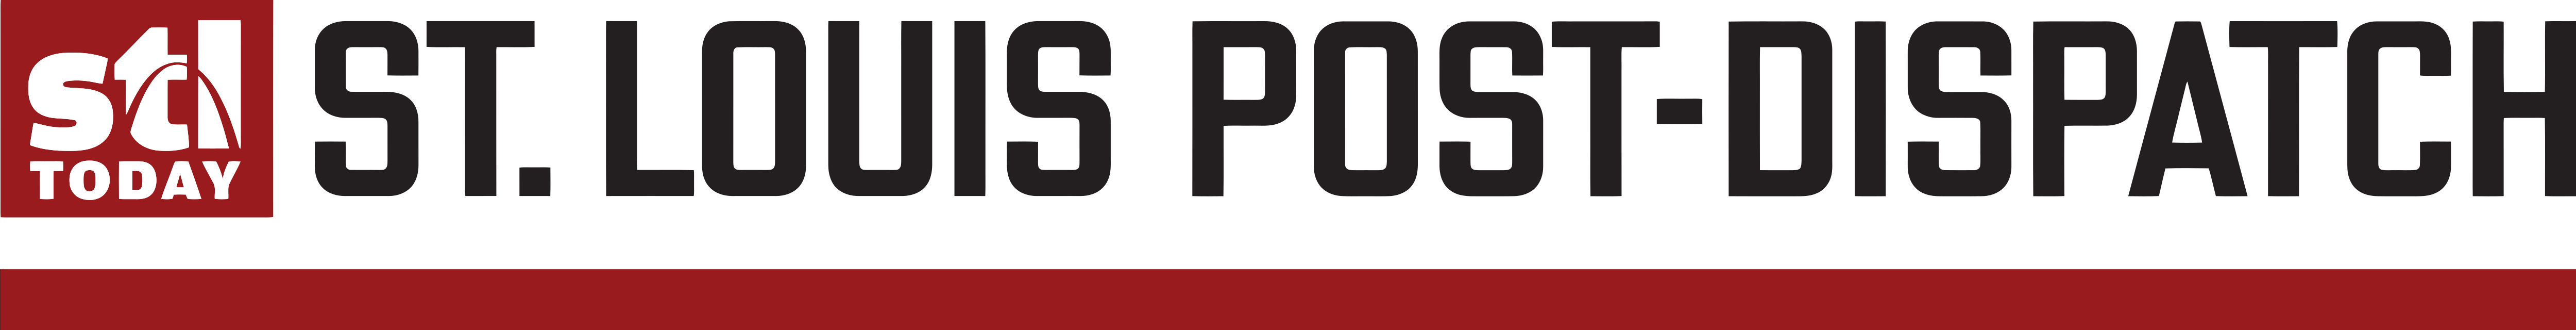 St. Louis post dispatch newspaper logo